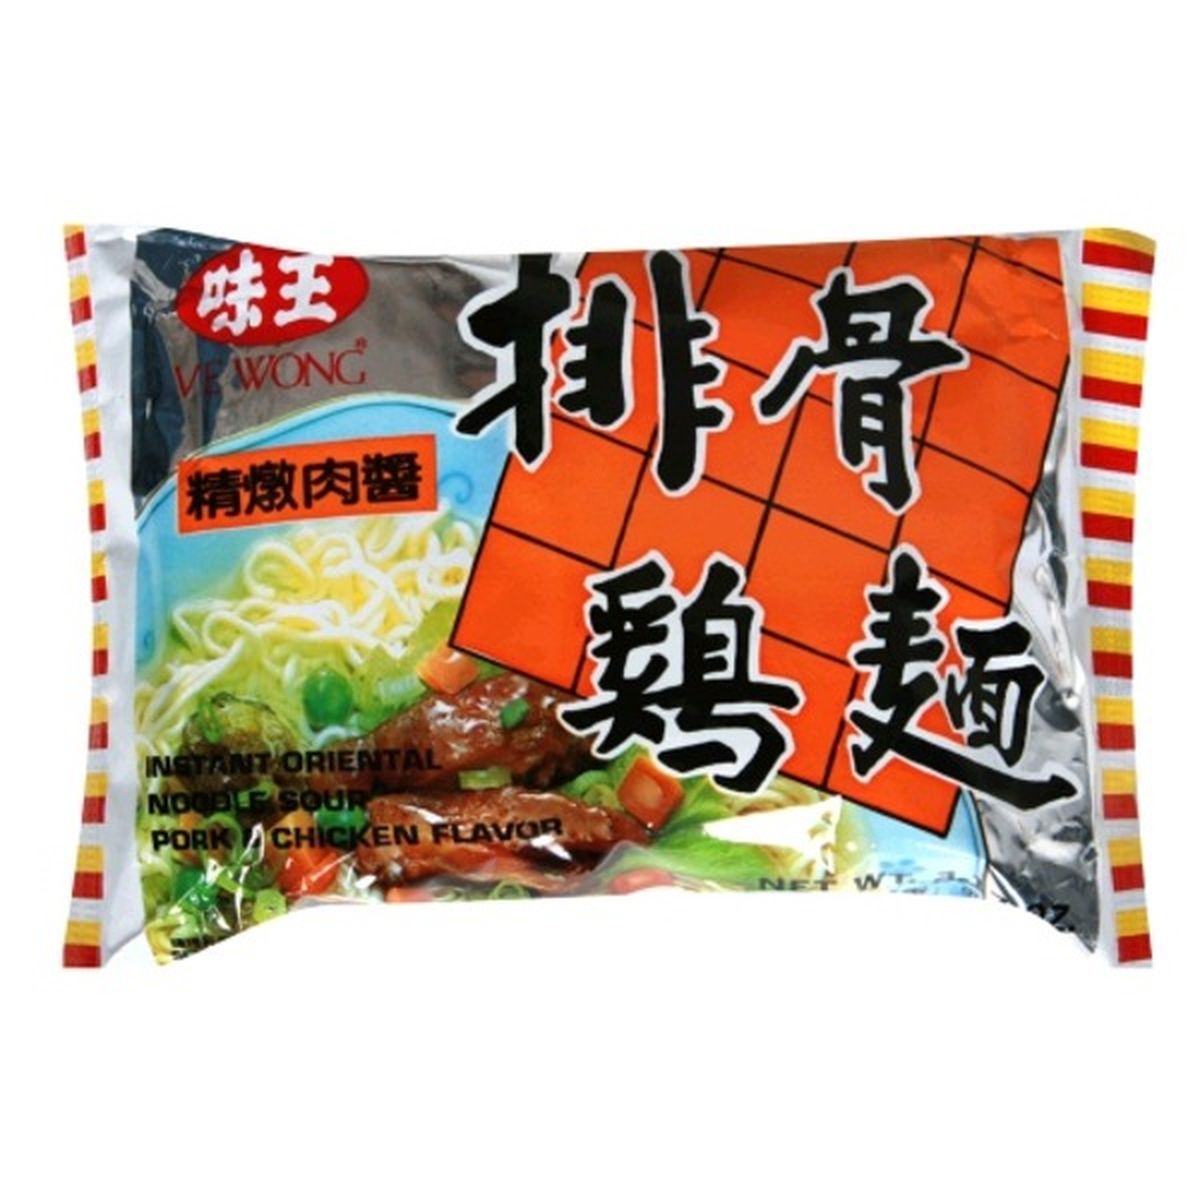 Calories in Ve Wong Instant Oriental Noodle Soup, Pork & Chicken Flavor